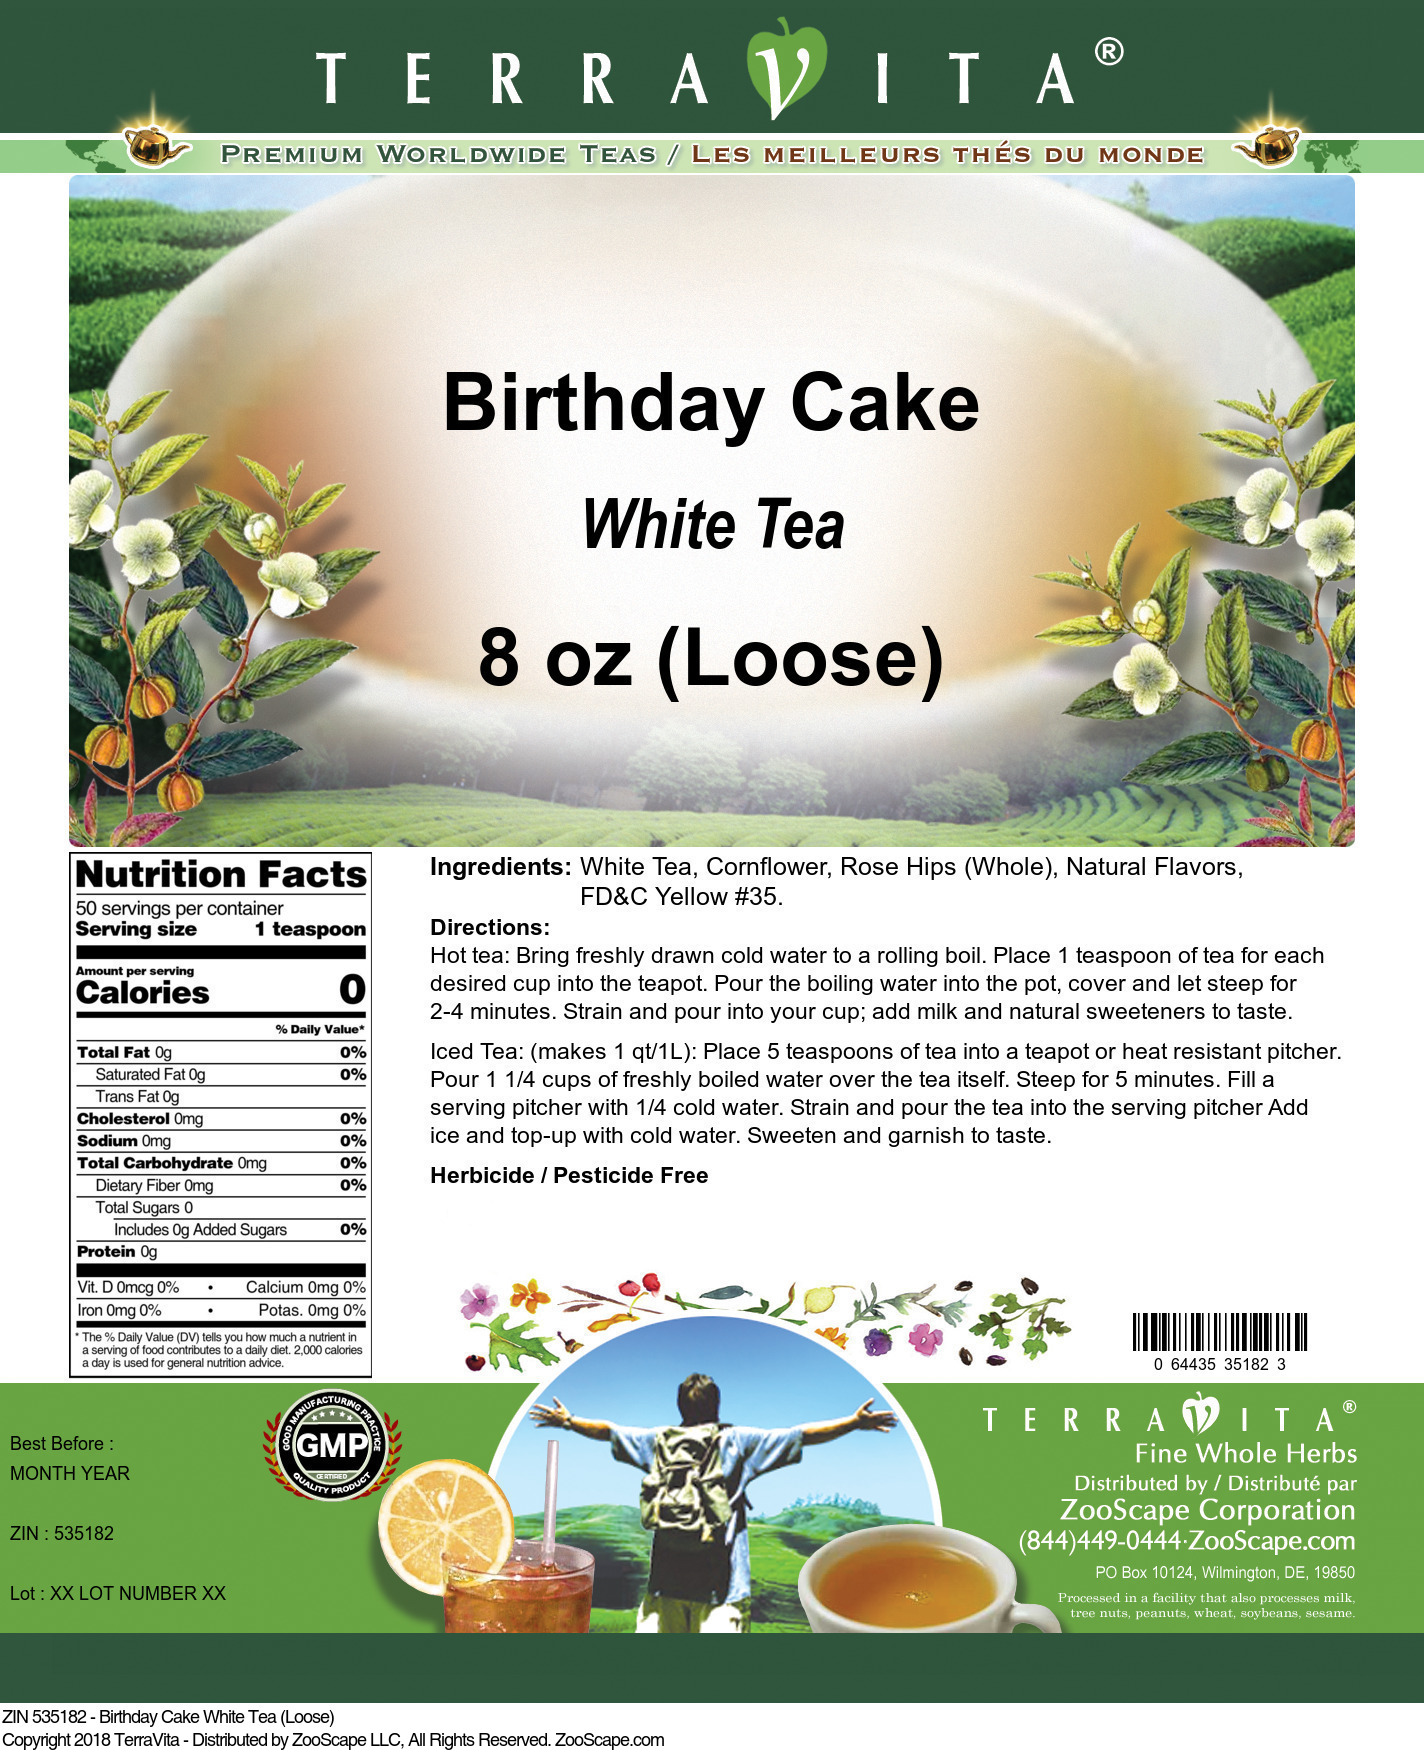 Birthday Cake White Tea (Loose) - Label